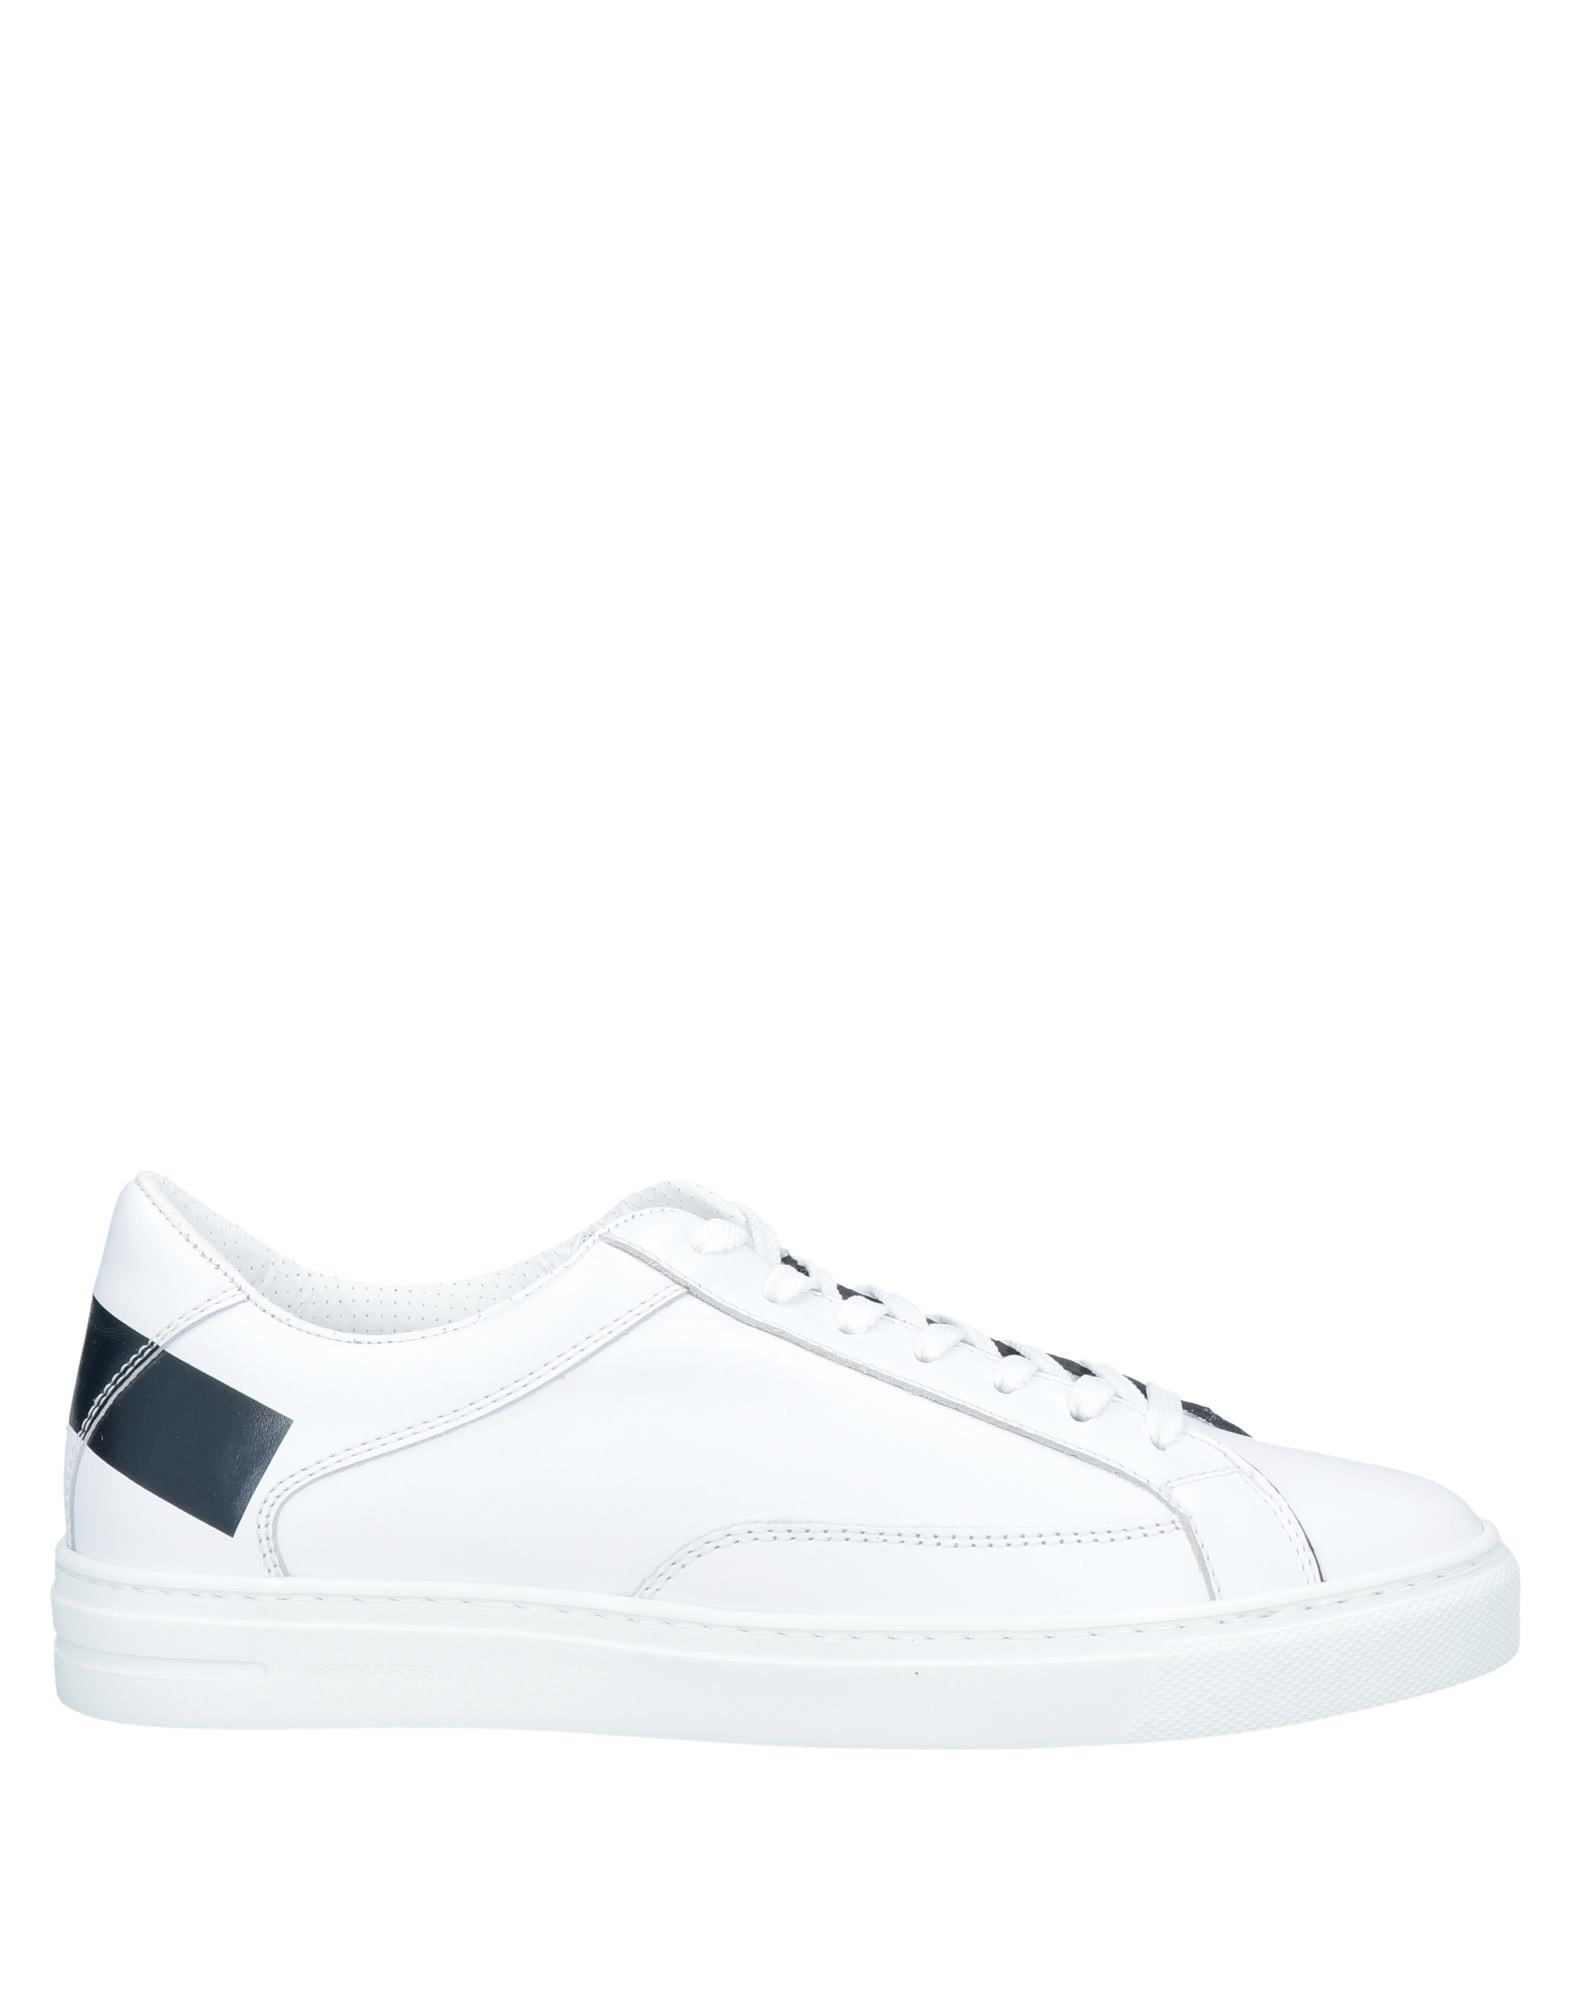 Shop Brimarts Man Sneakers White Size 7 Soft Leather, Textile Fibers